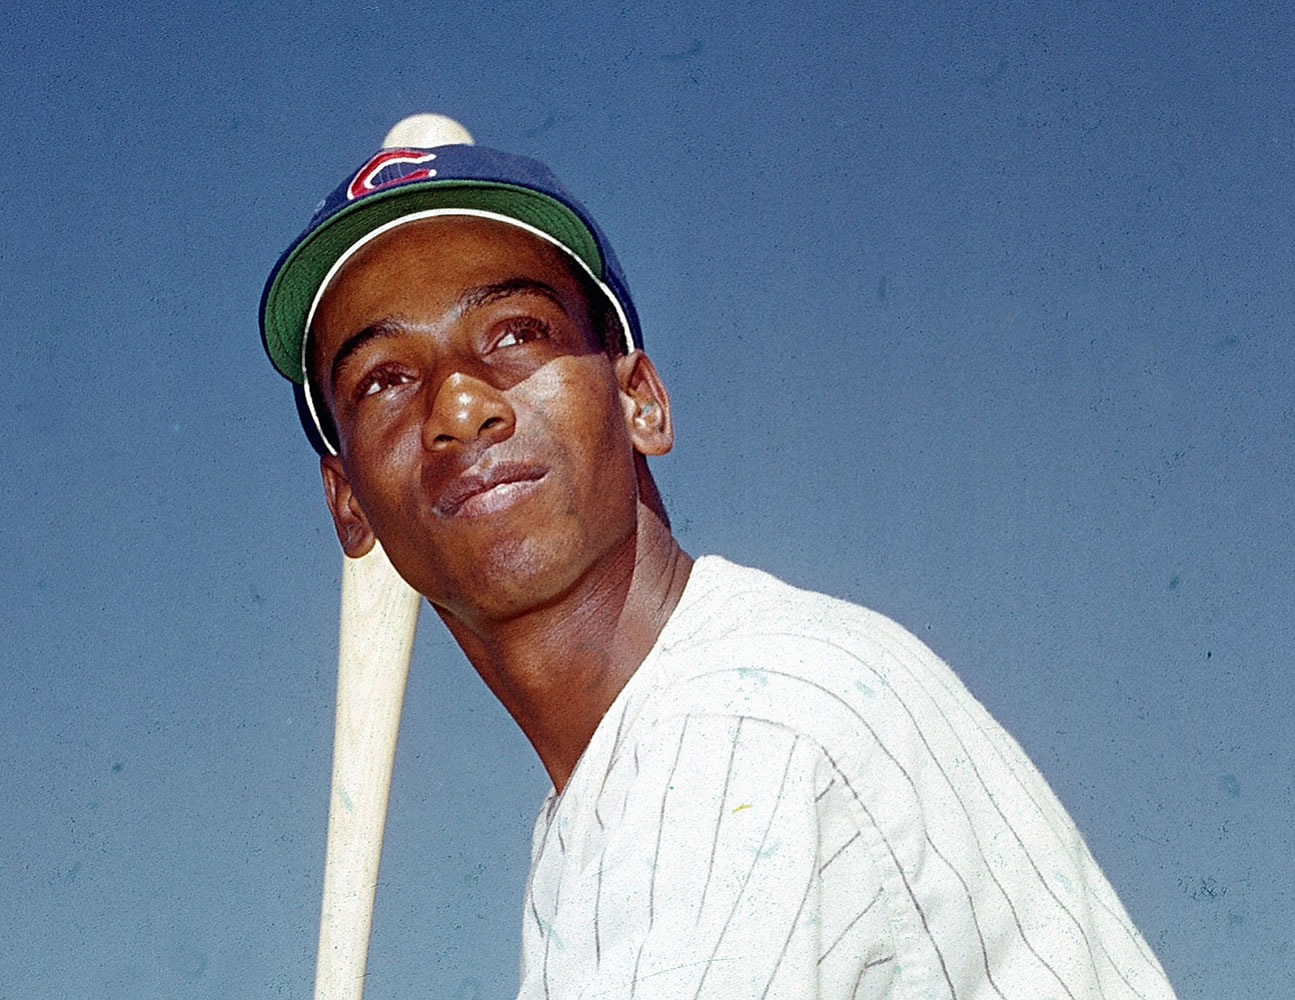 Ernie Banks, Hall of Famer and Mr. Cub